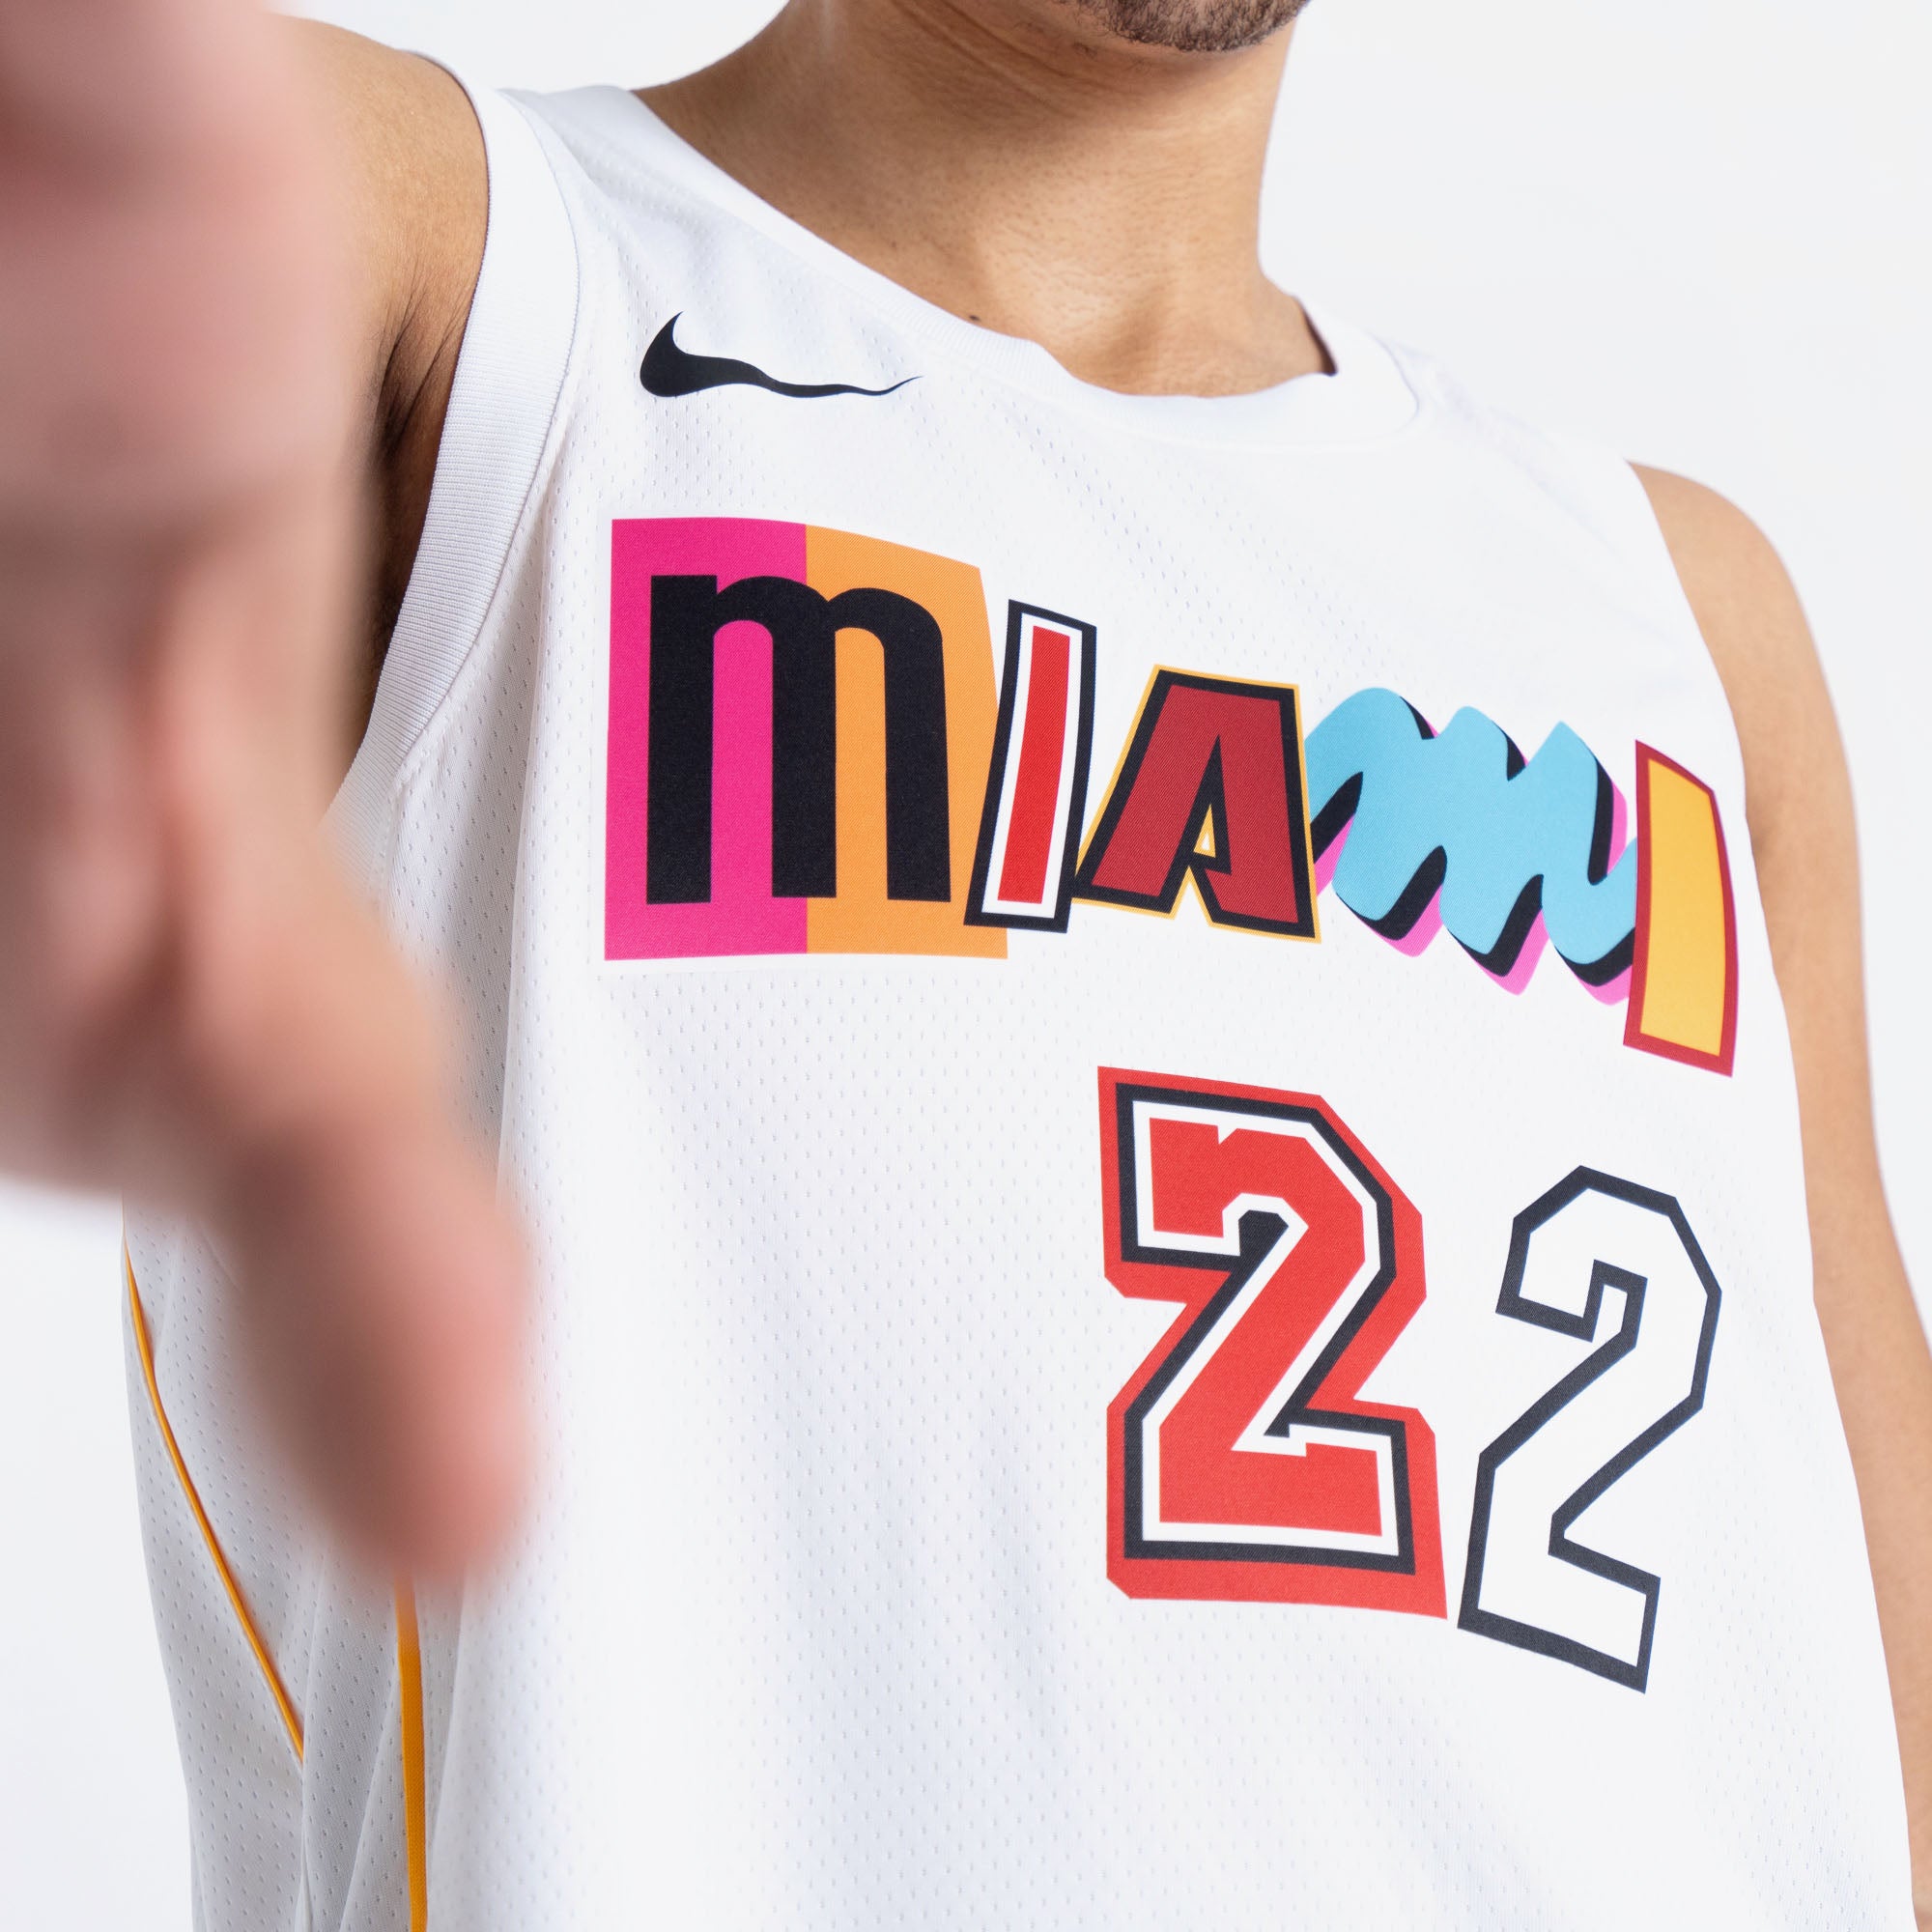 Nike City Edition Swingman - Jimmy Butler Miami Heat Junior